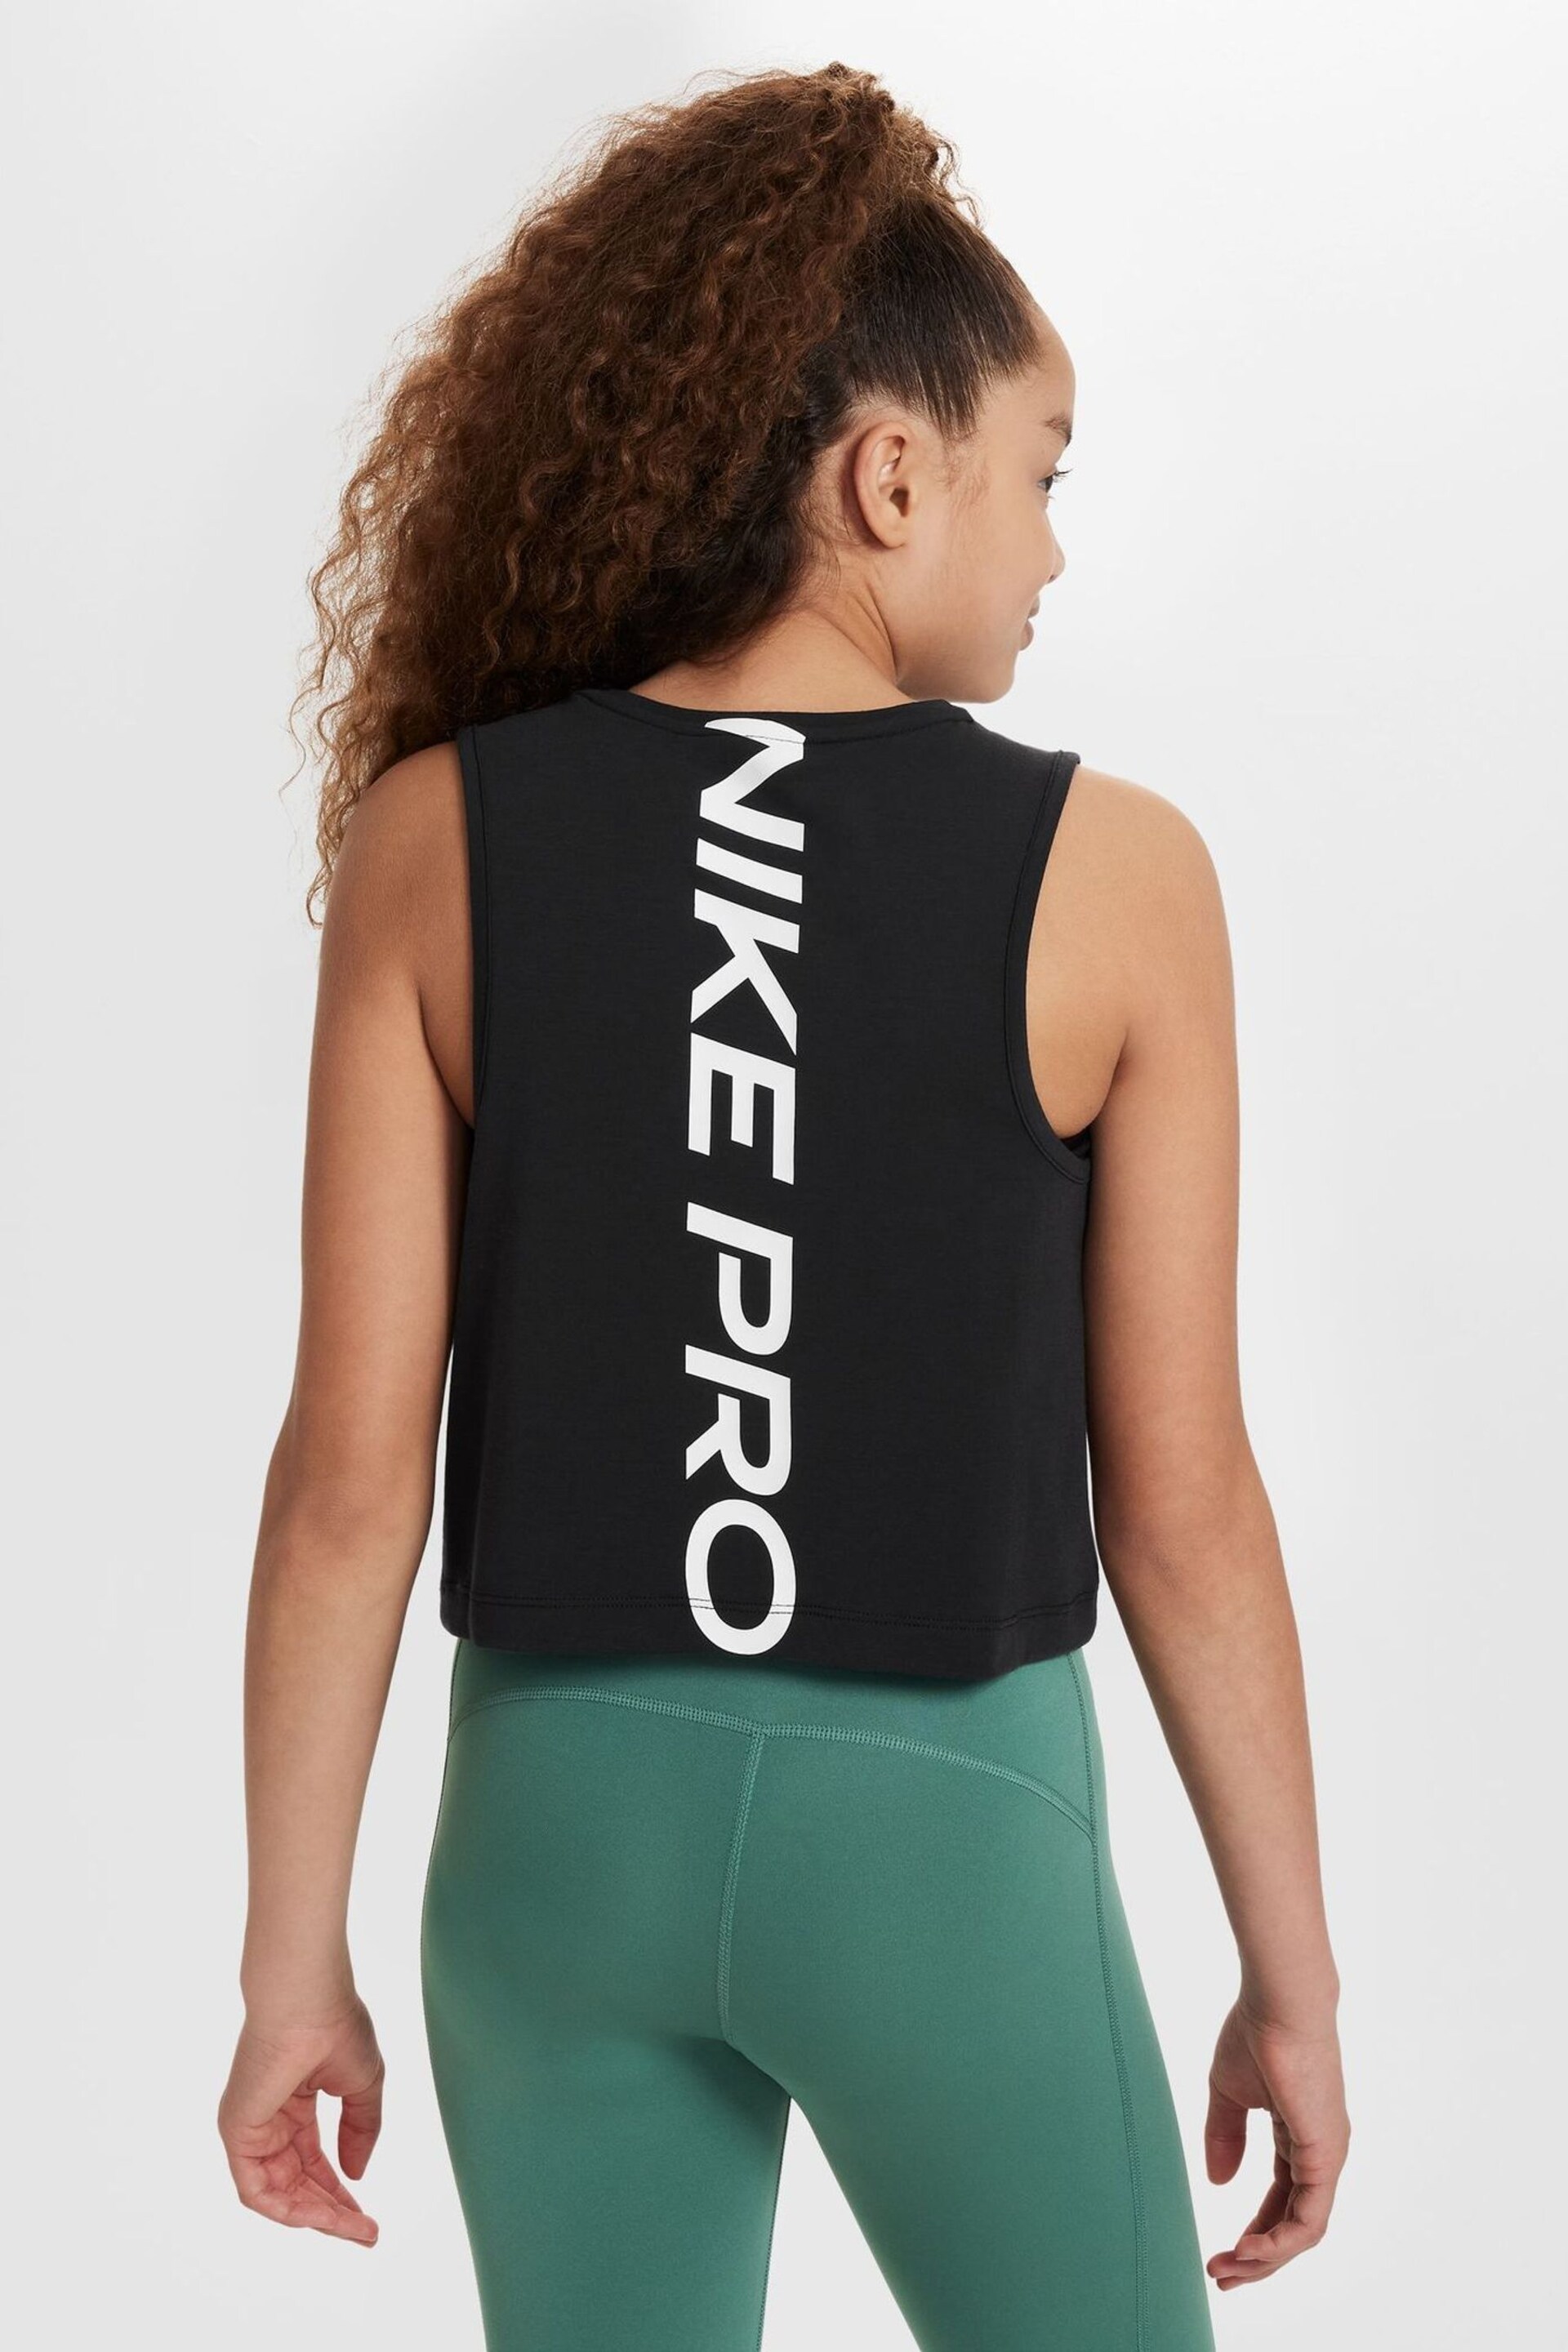 Nike Black Pro Dri-FIT Vest Top - Image 2 of 5